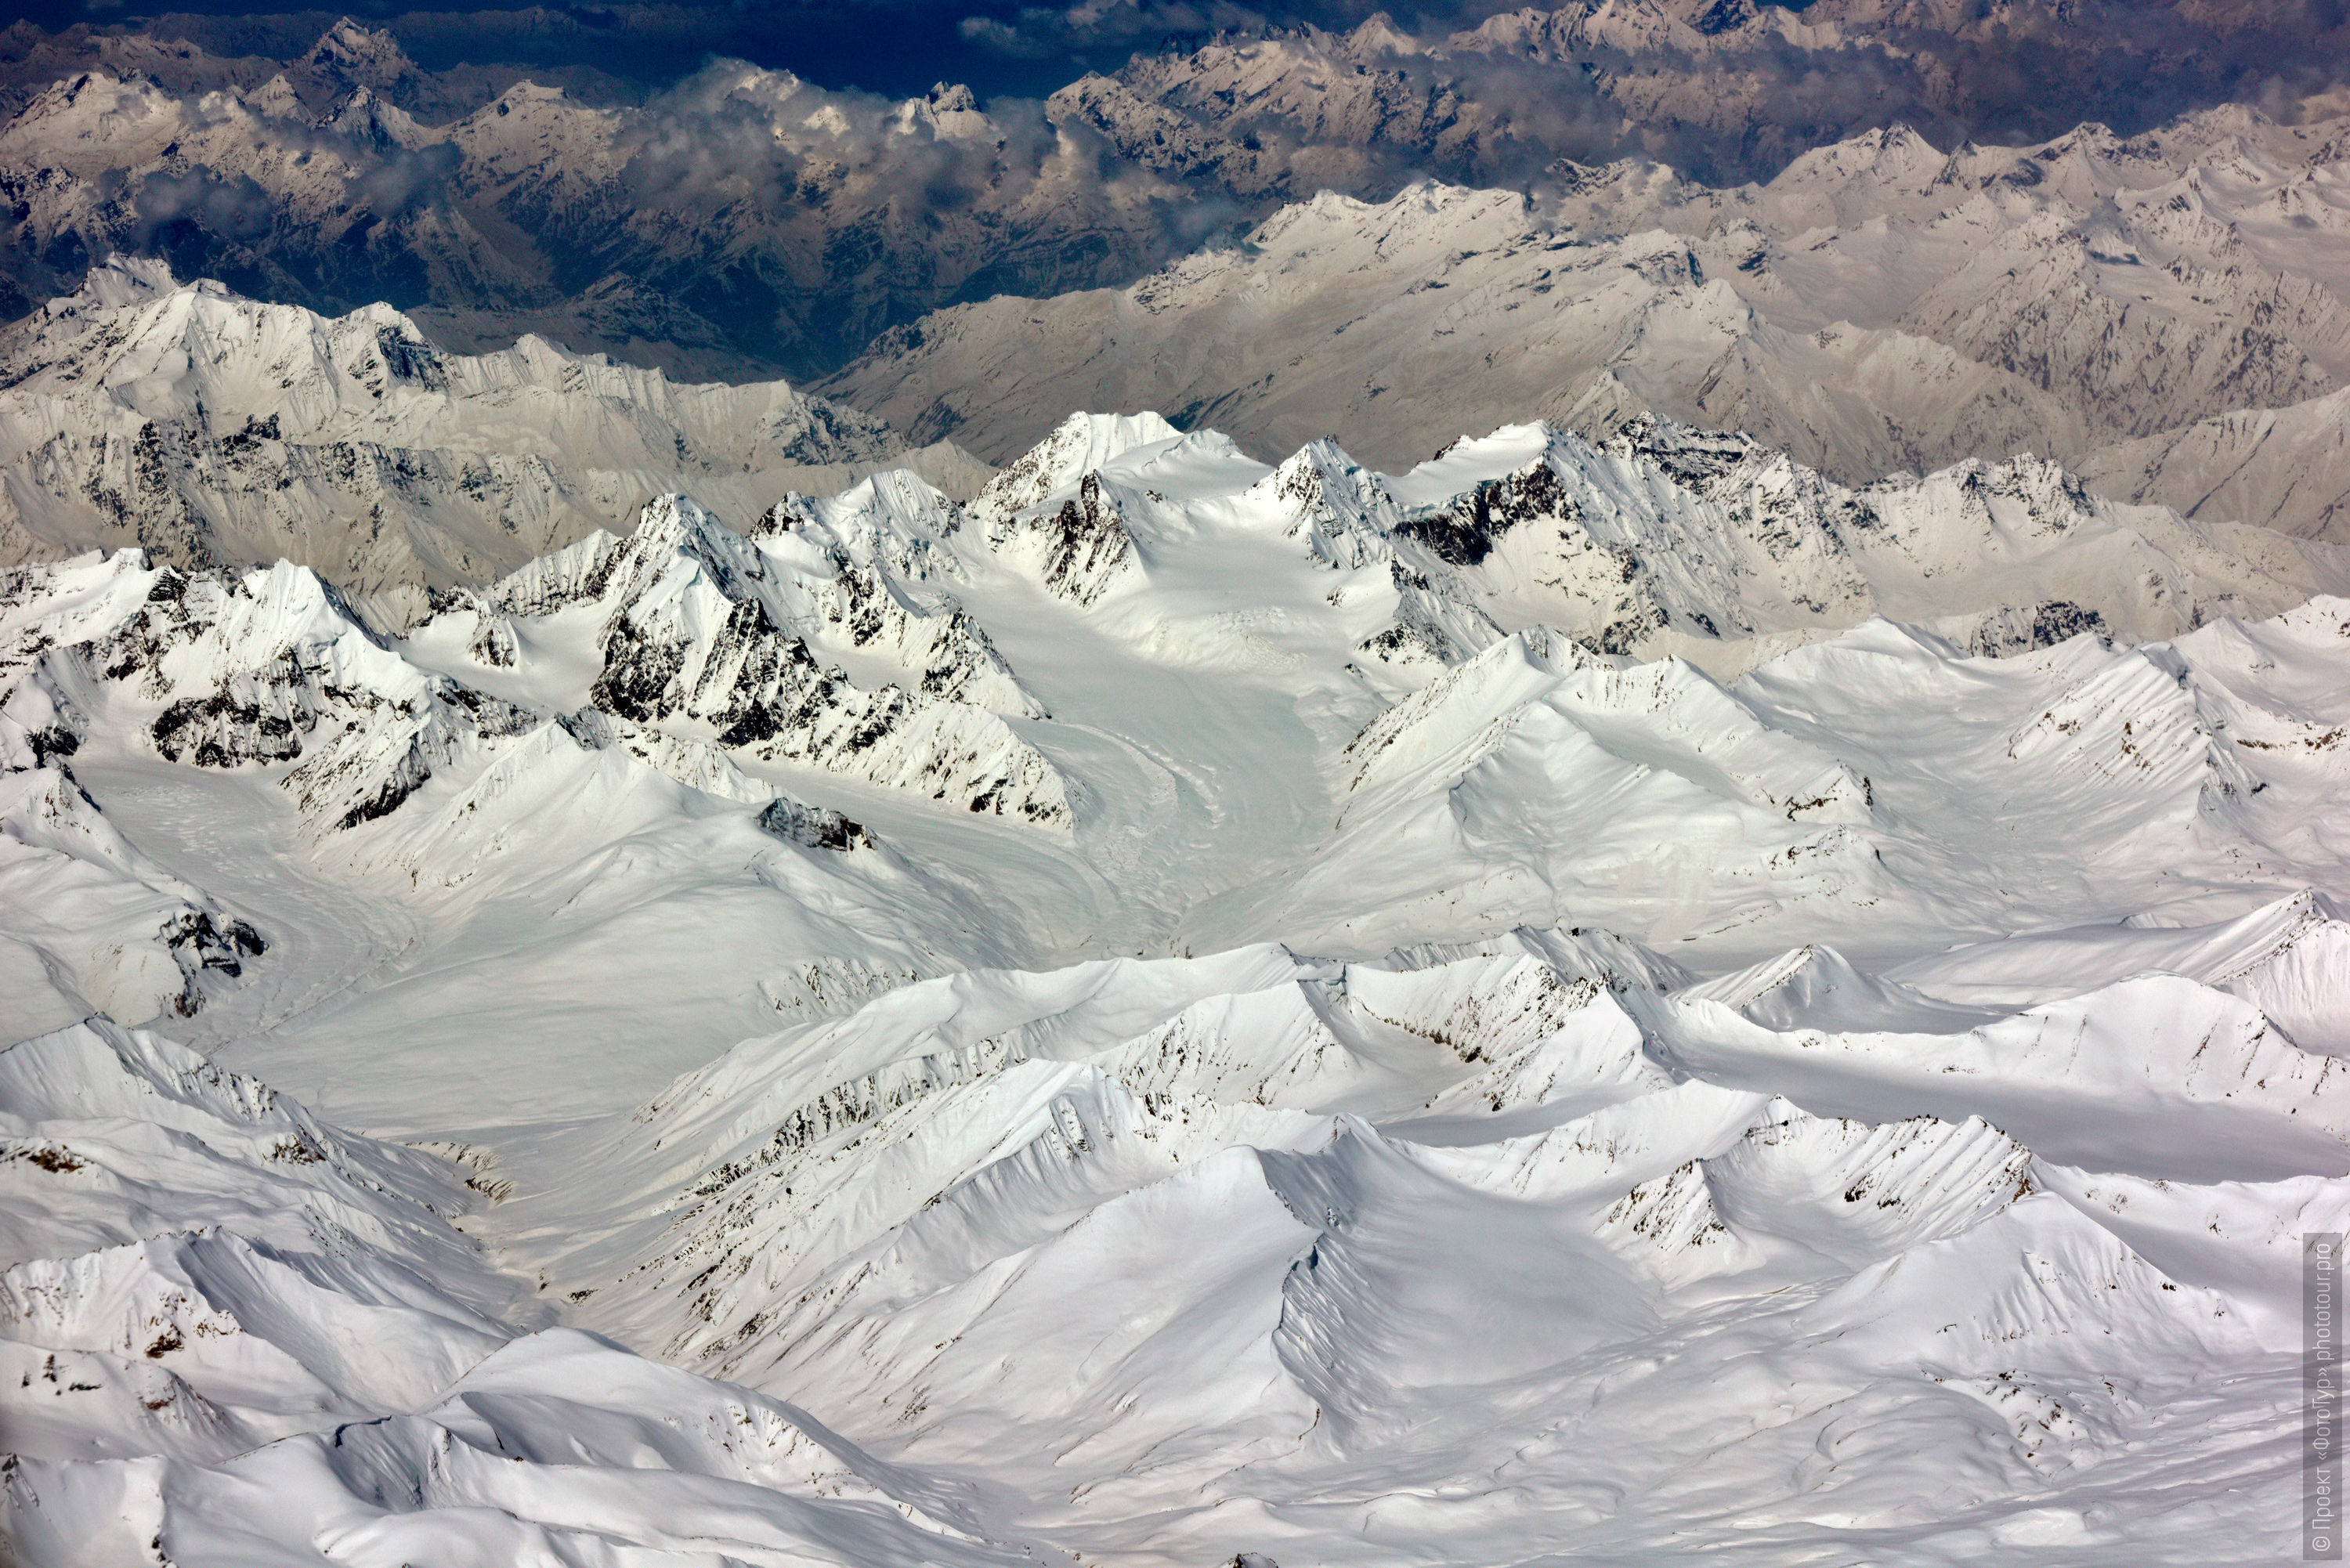 Снежные горные цепи Ладакха. Фототуры в Гималаи.